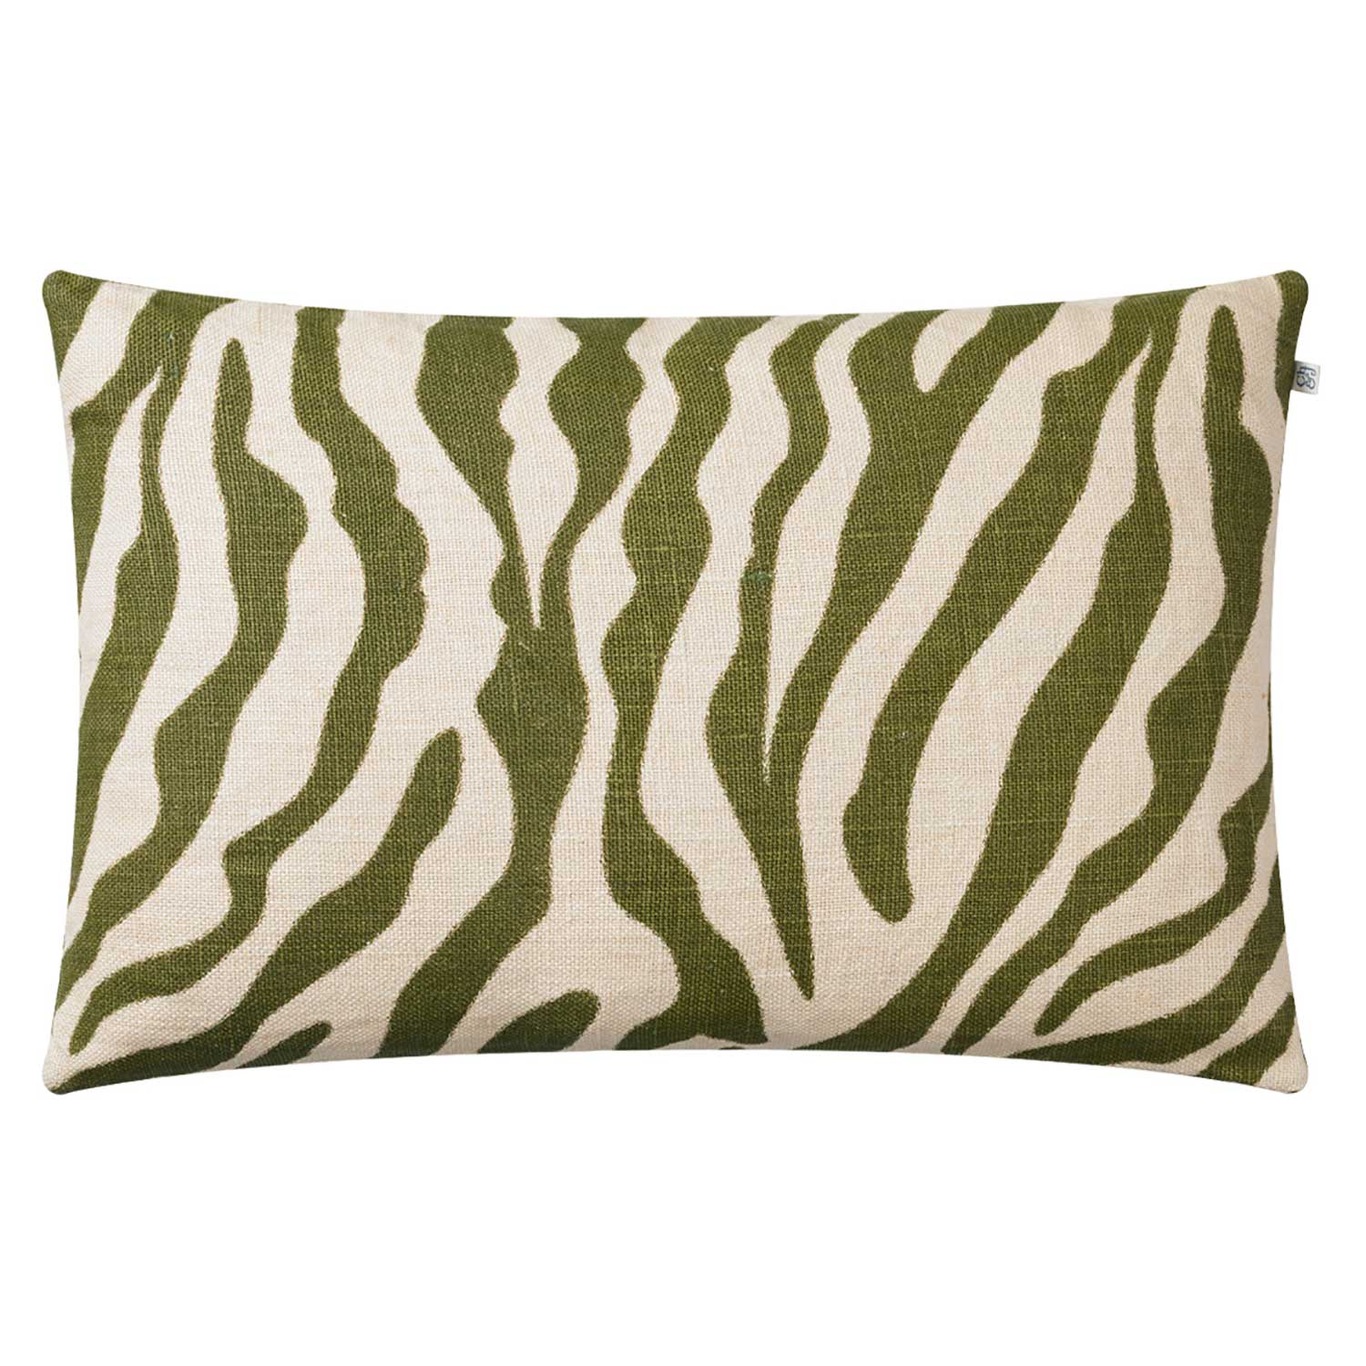 Zebra Cushion Cover 40x60 cm, Cactus Green